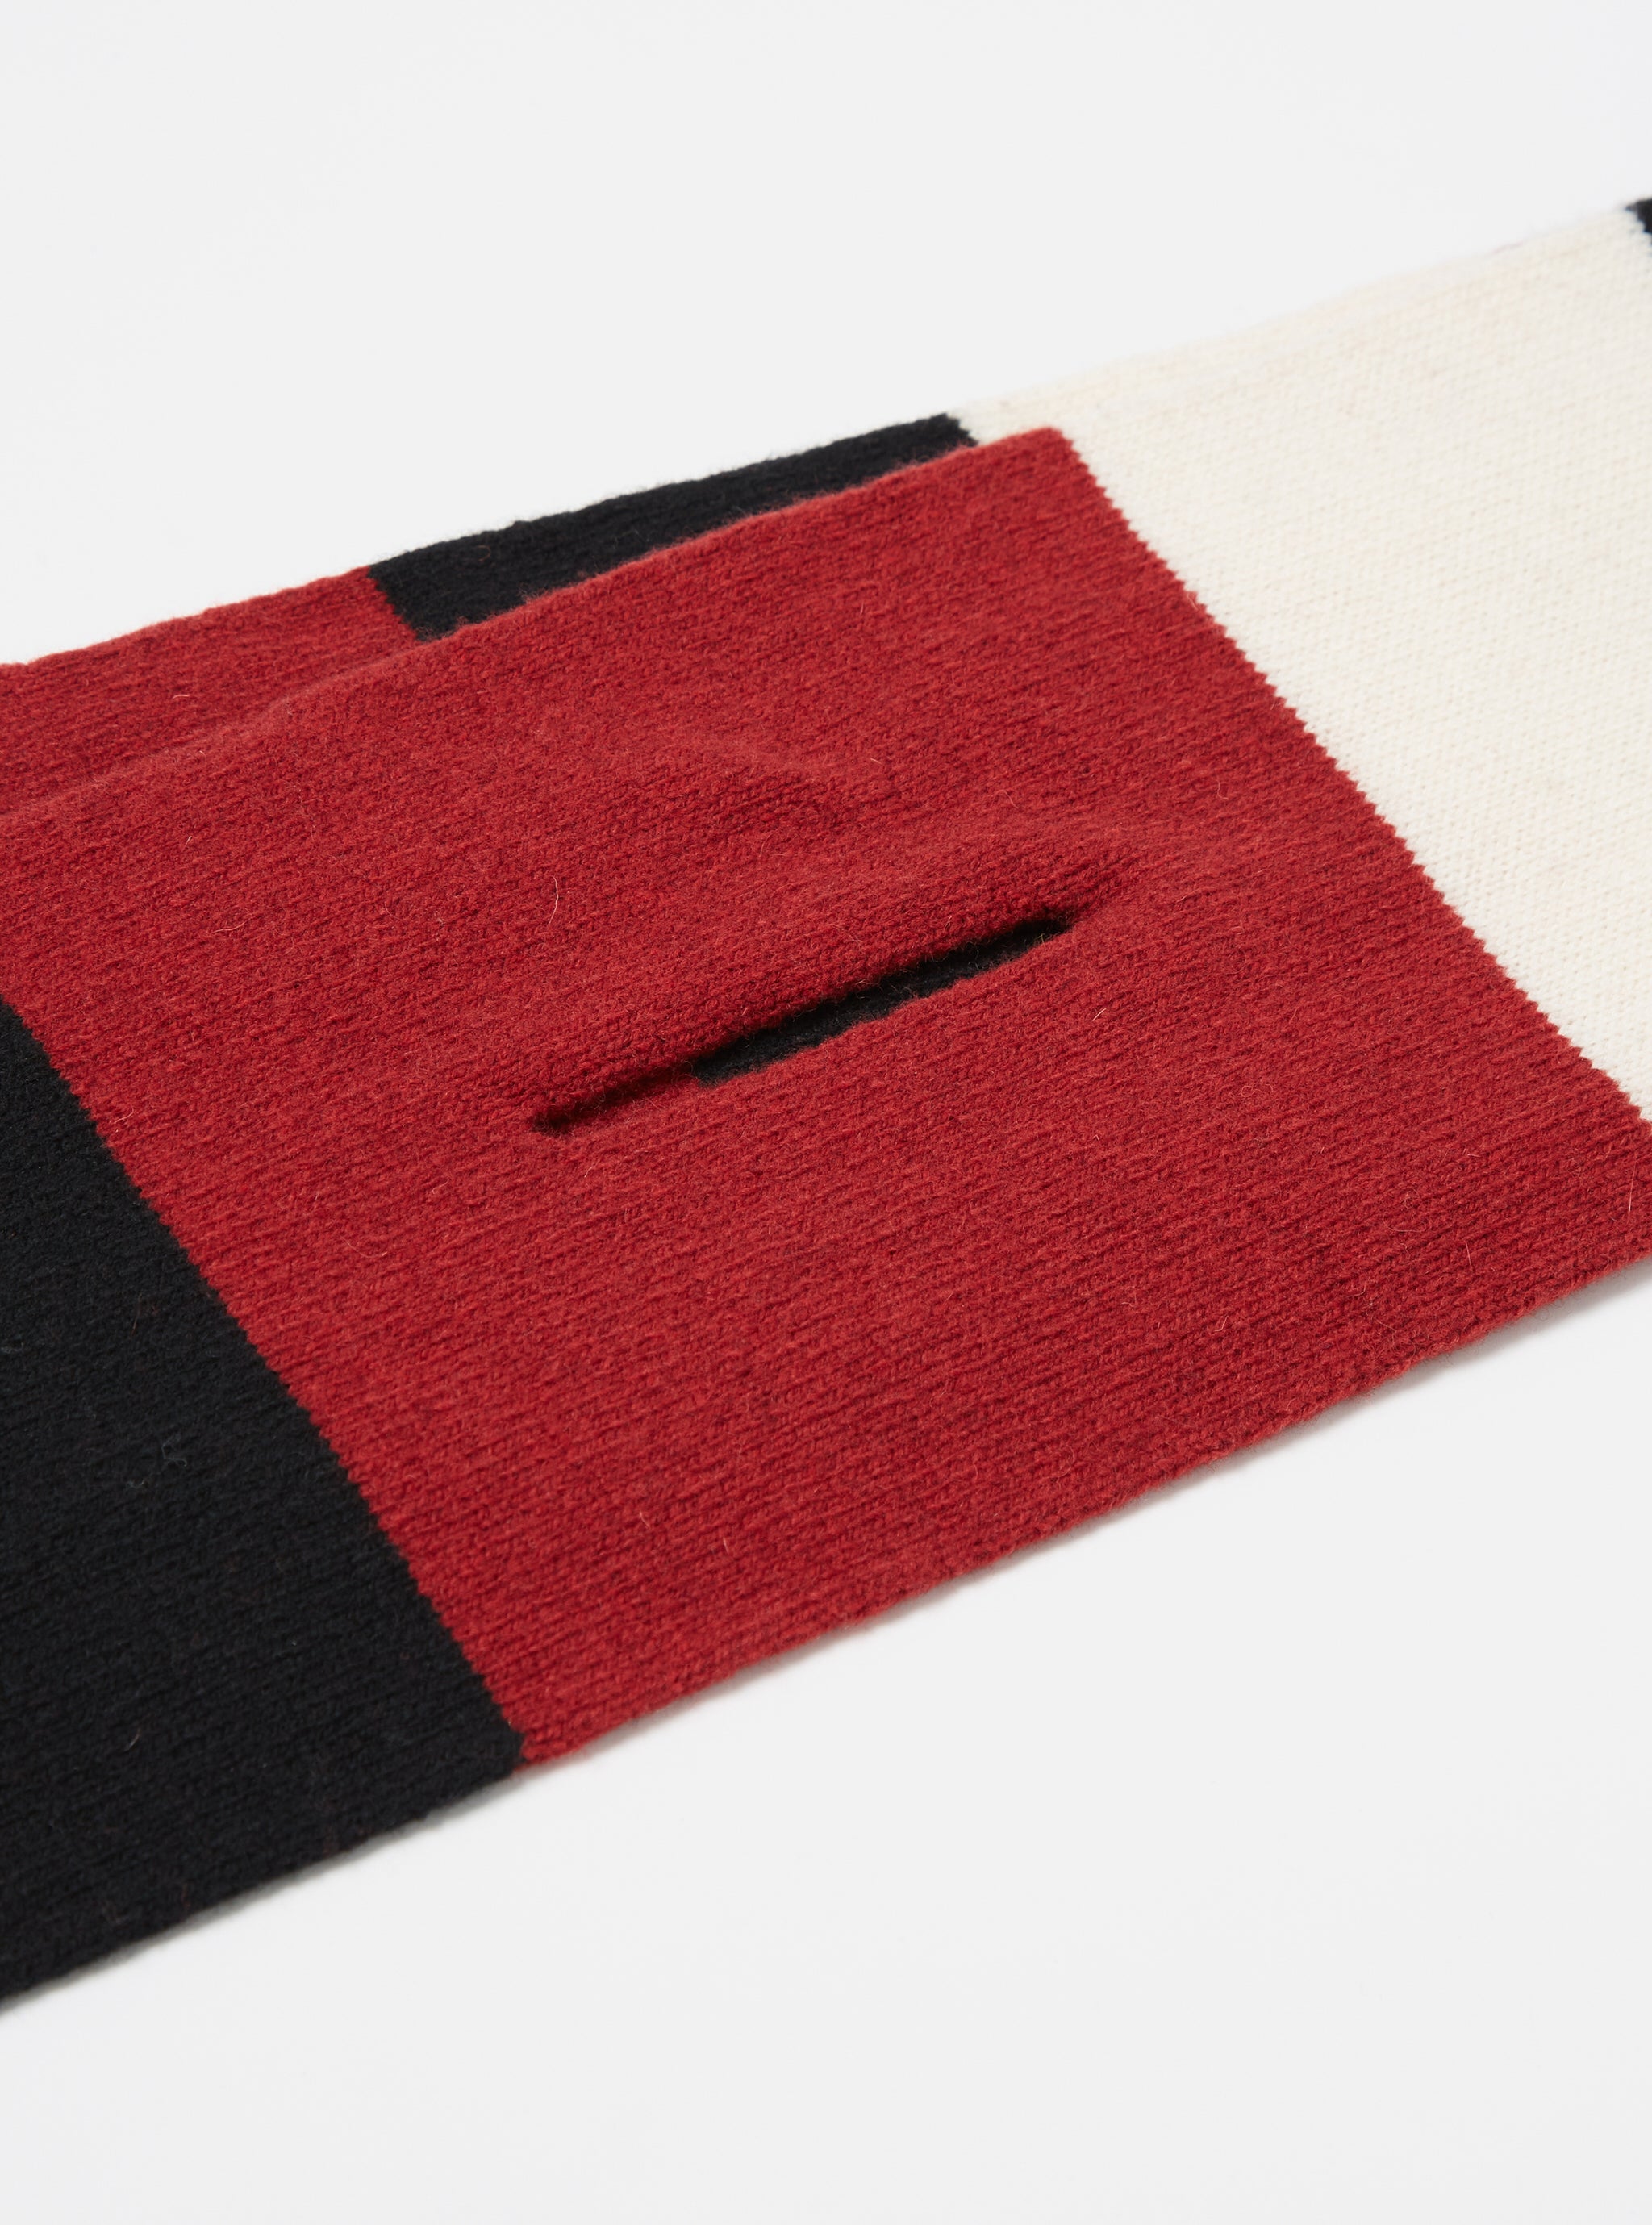 Universal Works Deluxe Football Scarf in Black/Red/Ecru Soft Wool